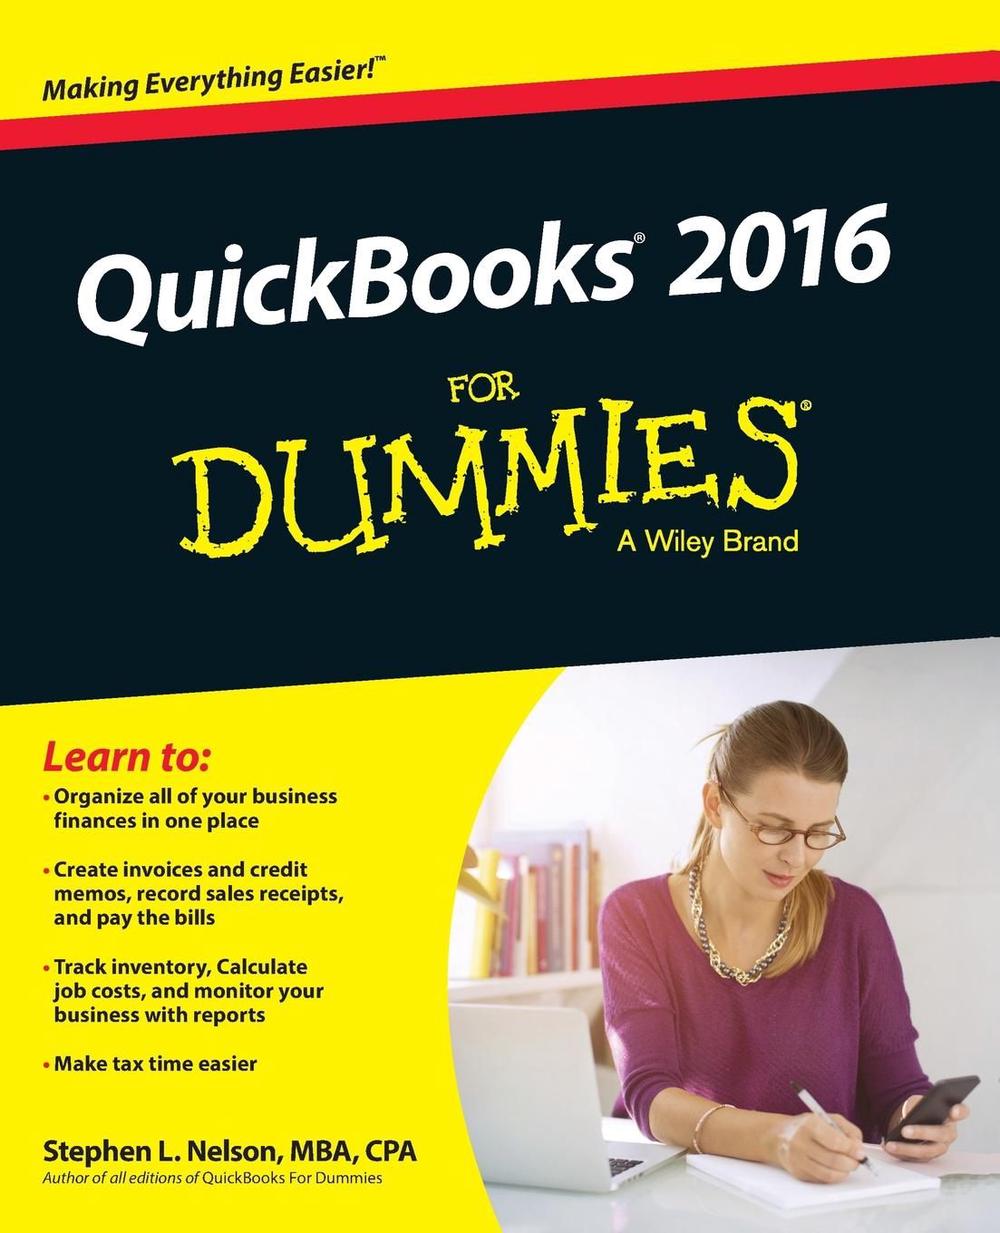 buy quickbooks pro 2016 sams